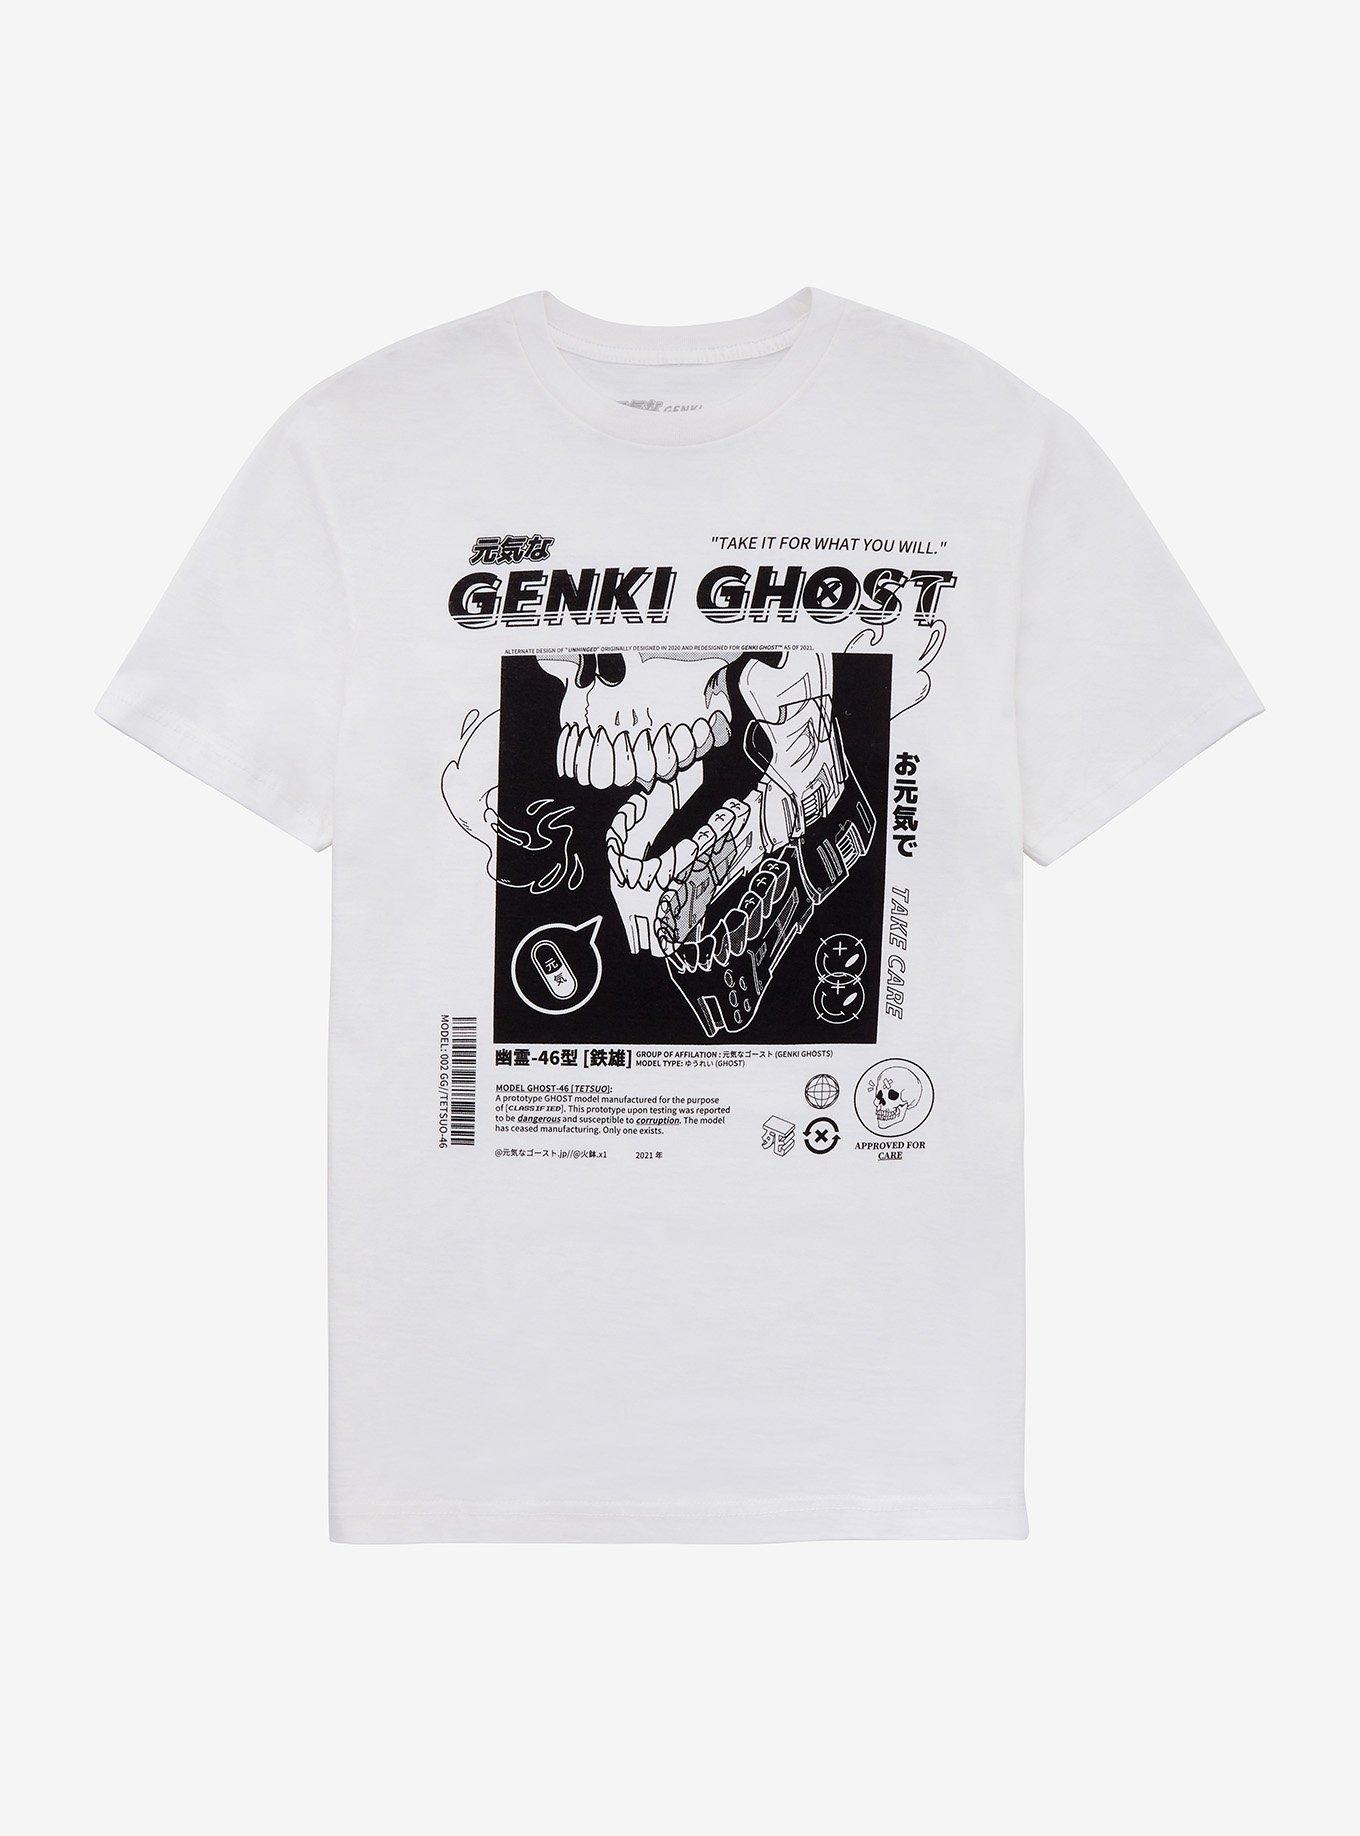 Model Ghost 46 T-Shirt By Genki Ghost, MULTI, hi-res